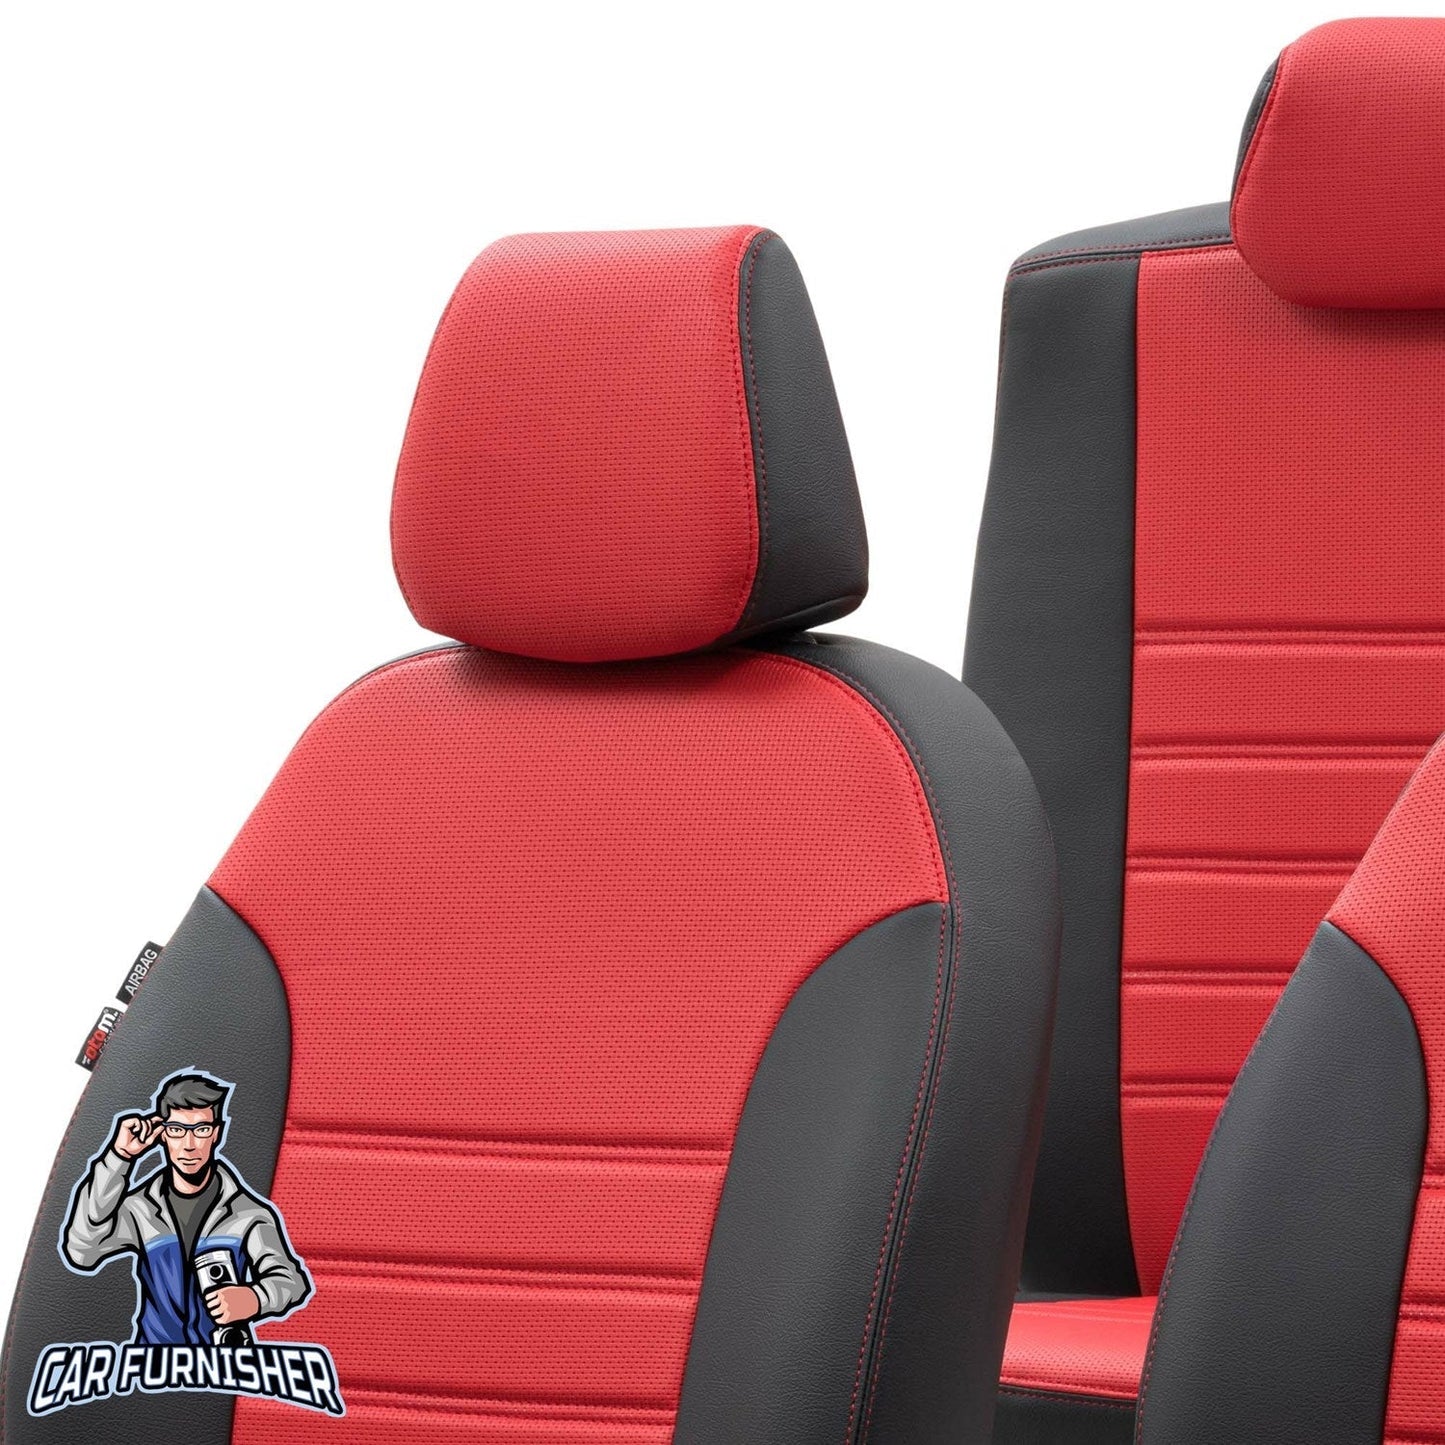 Suzuki Vitara Seat Covers New York Leather Design Red Leather